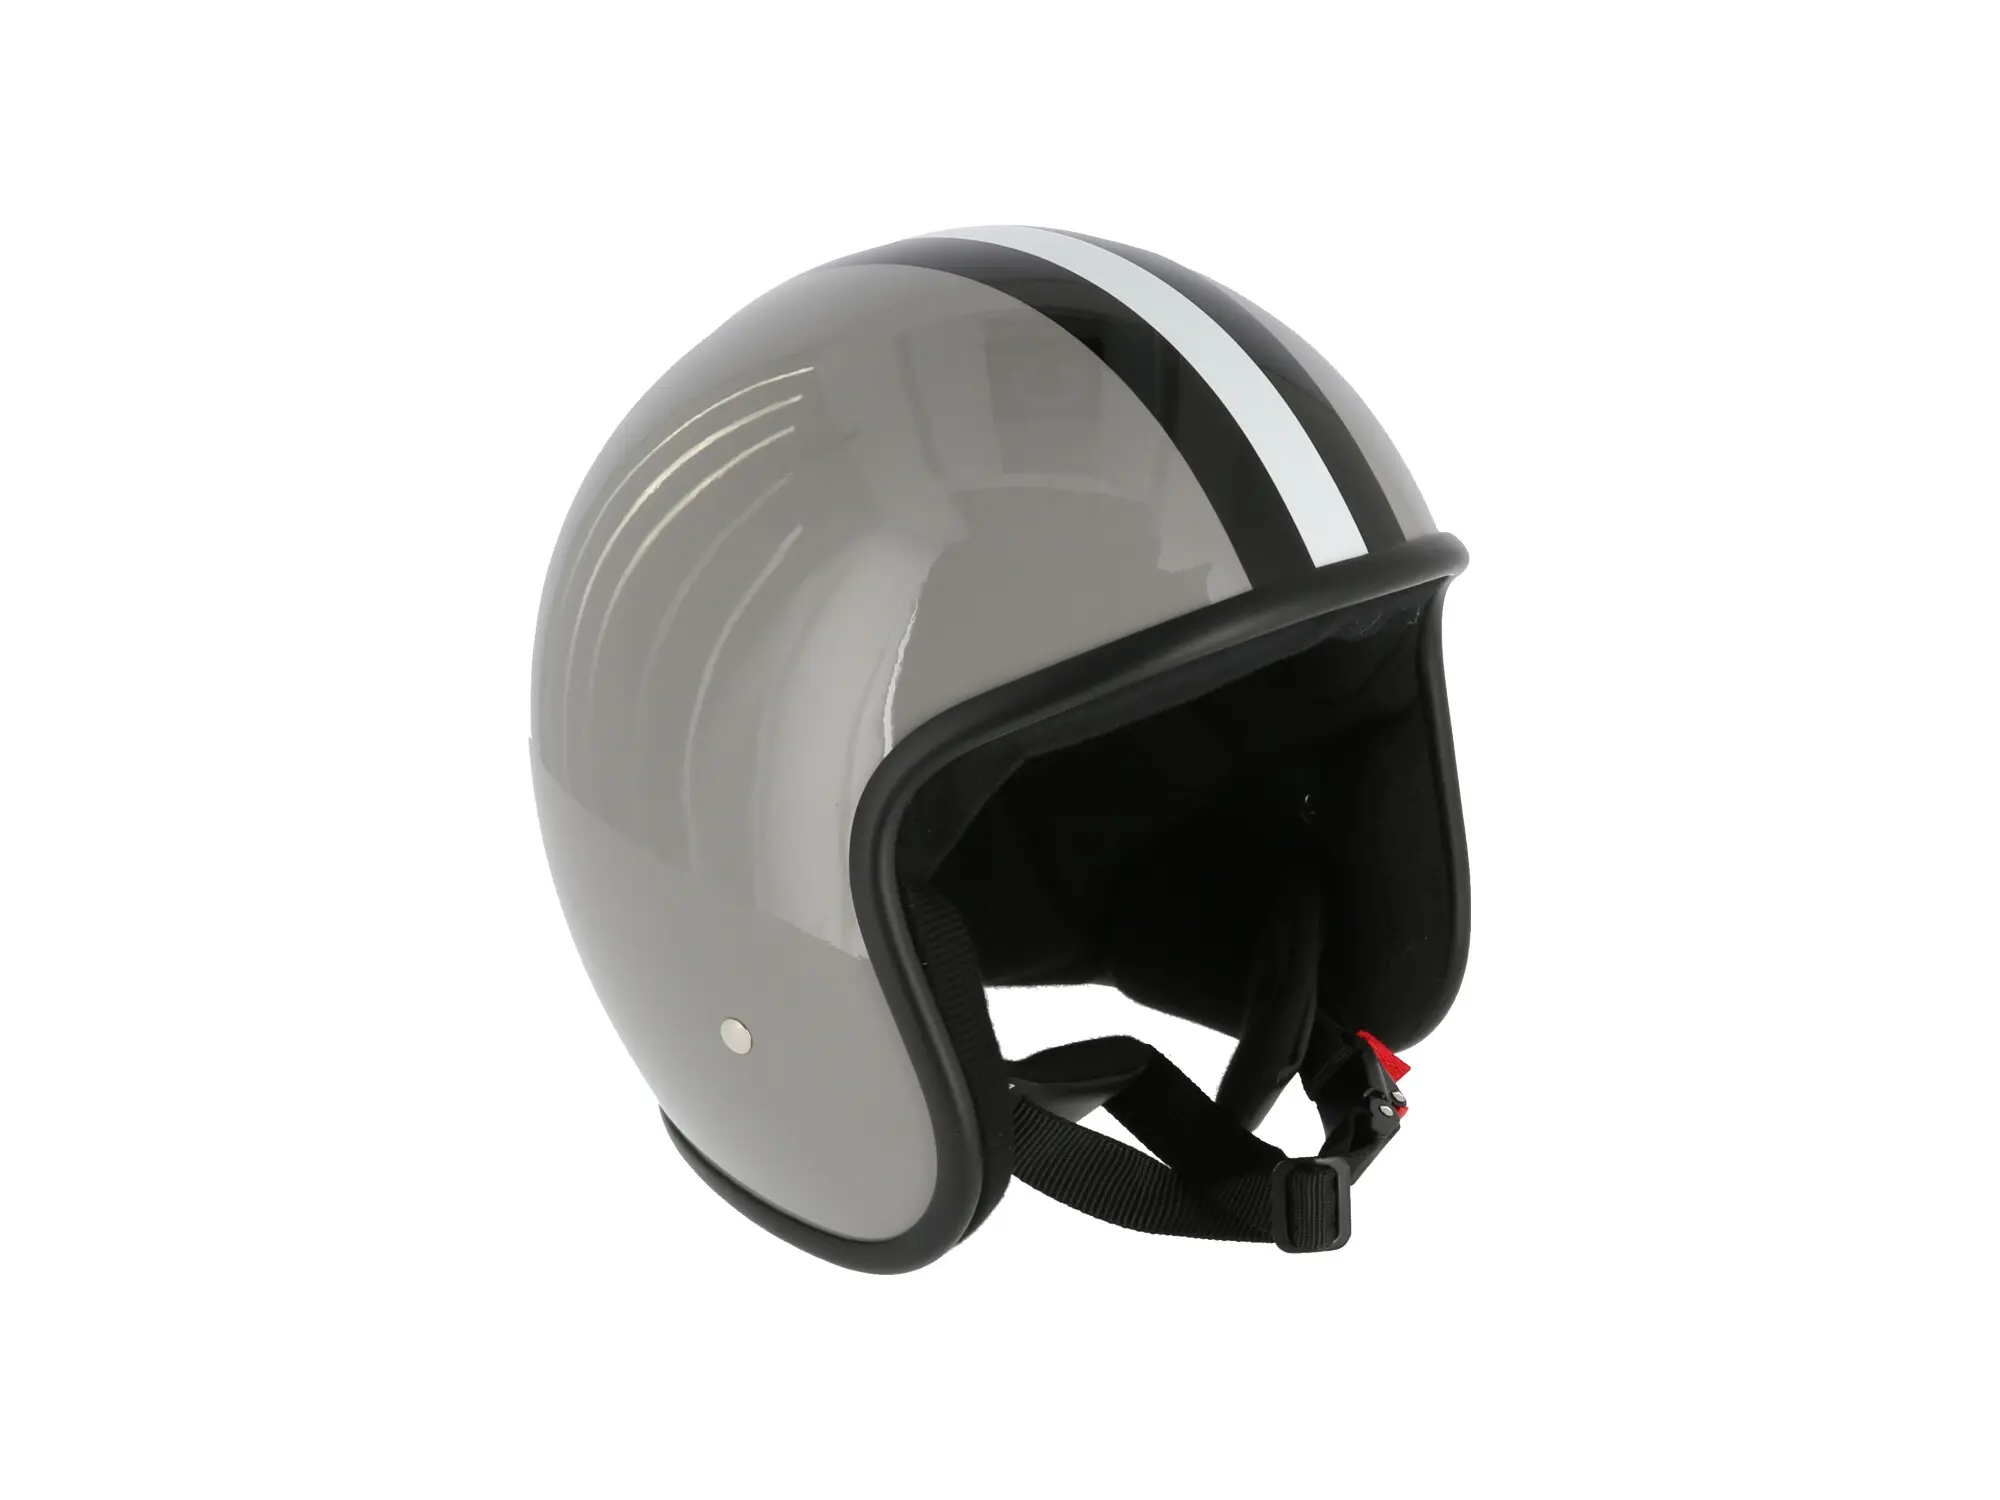 ARC Helm "Modell A-611" Retrolook - Grau mit Streifen, Art.-Nr.: 10071228 - Bild 1